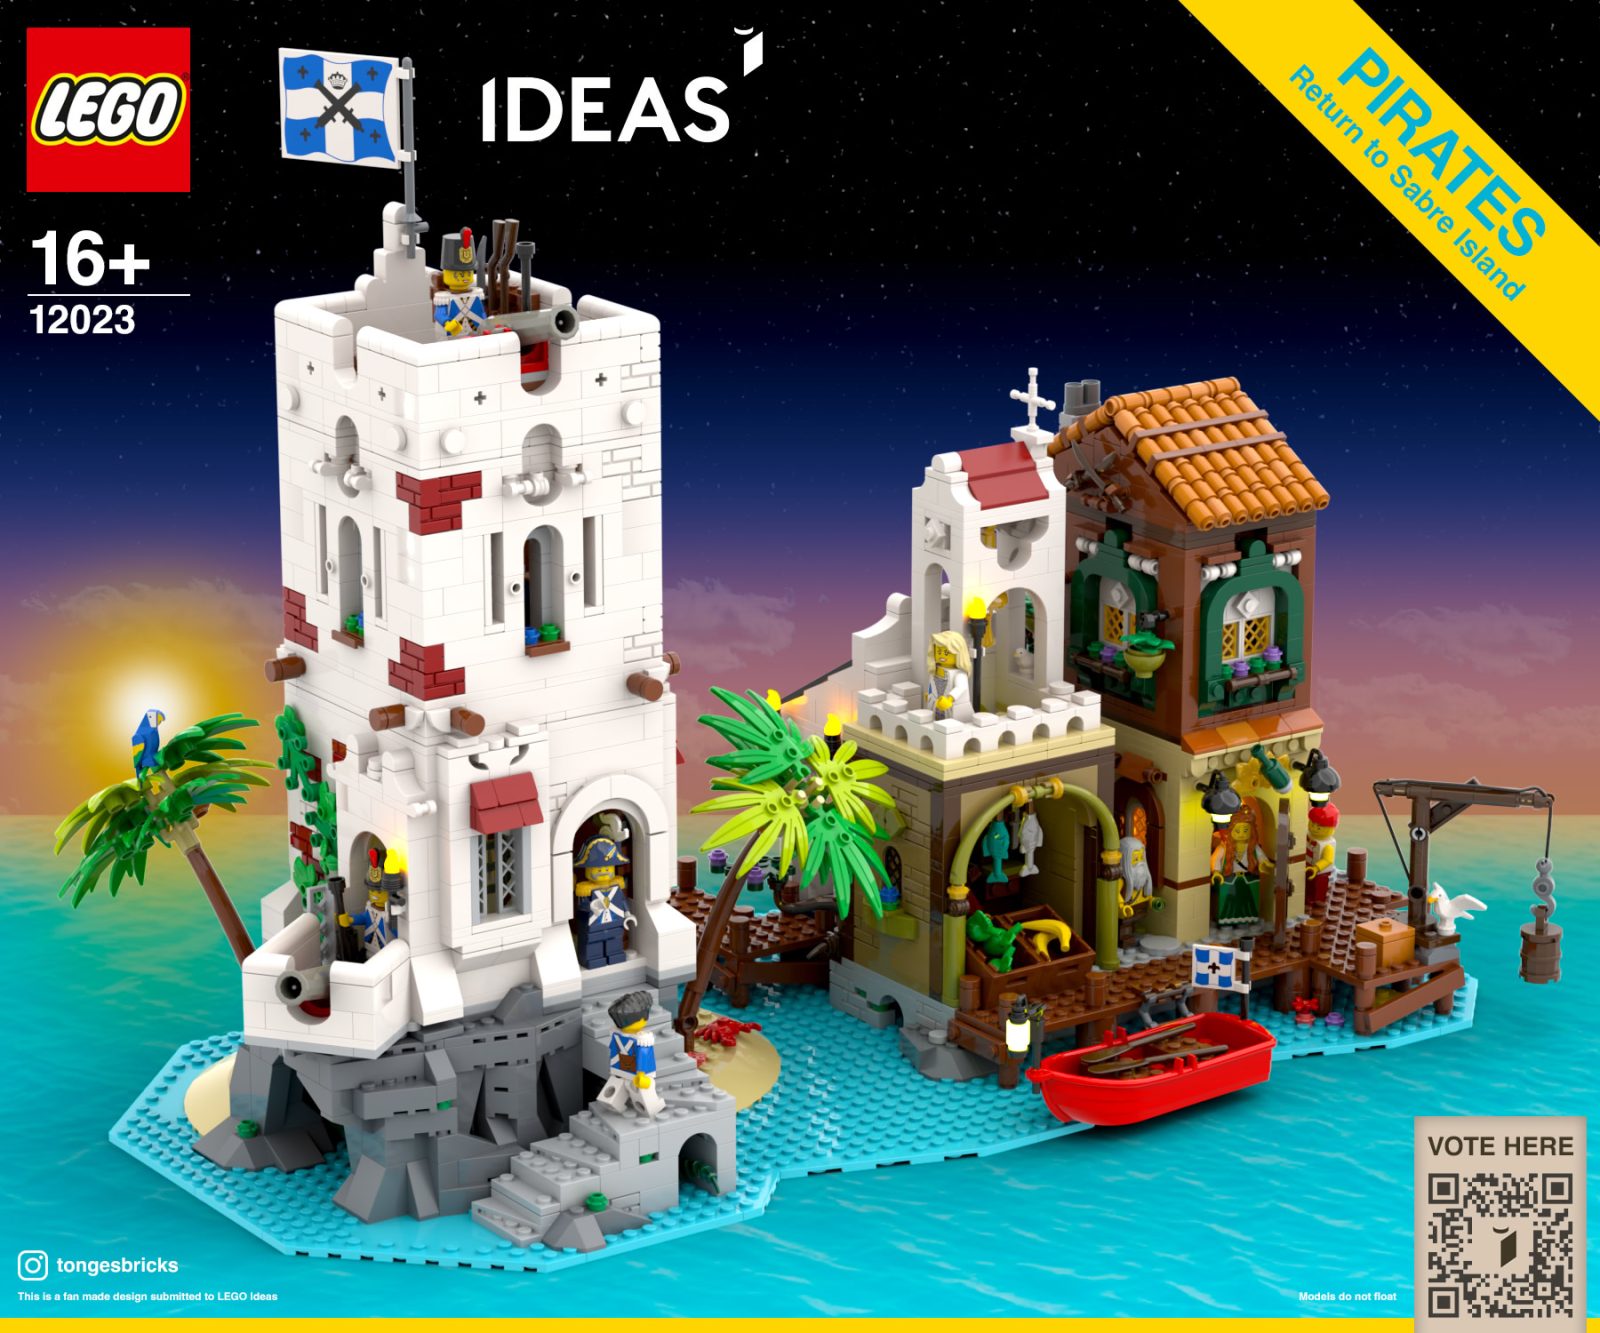 Box Art for "Return to Sabre Island" LEGO Ideas